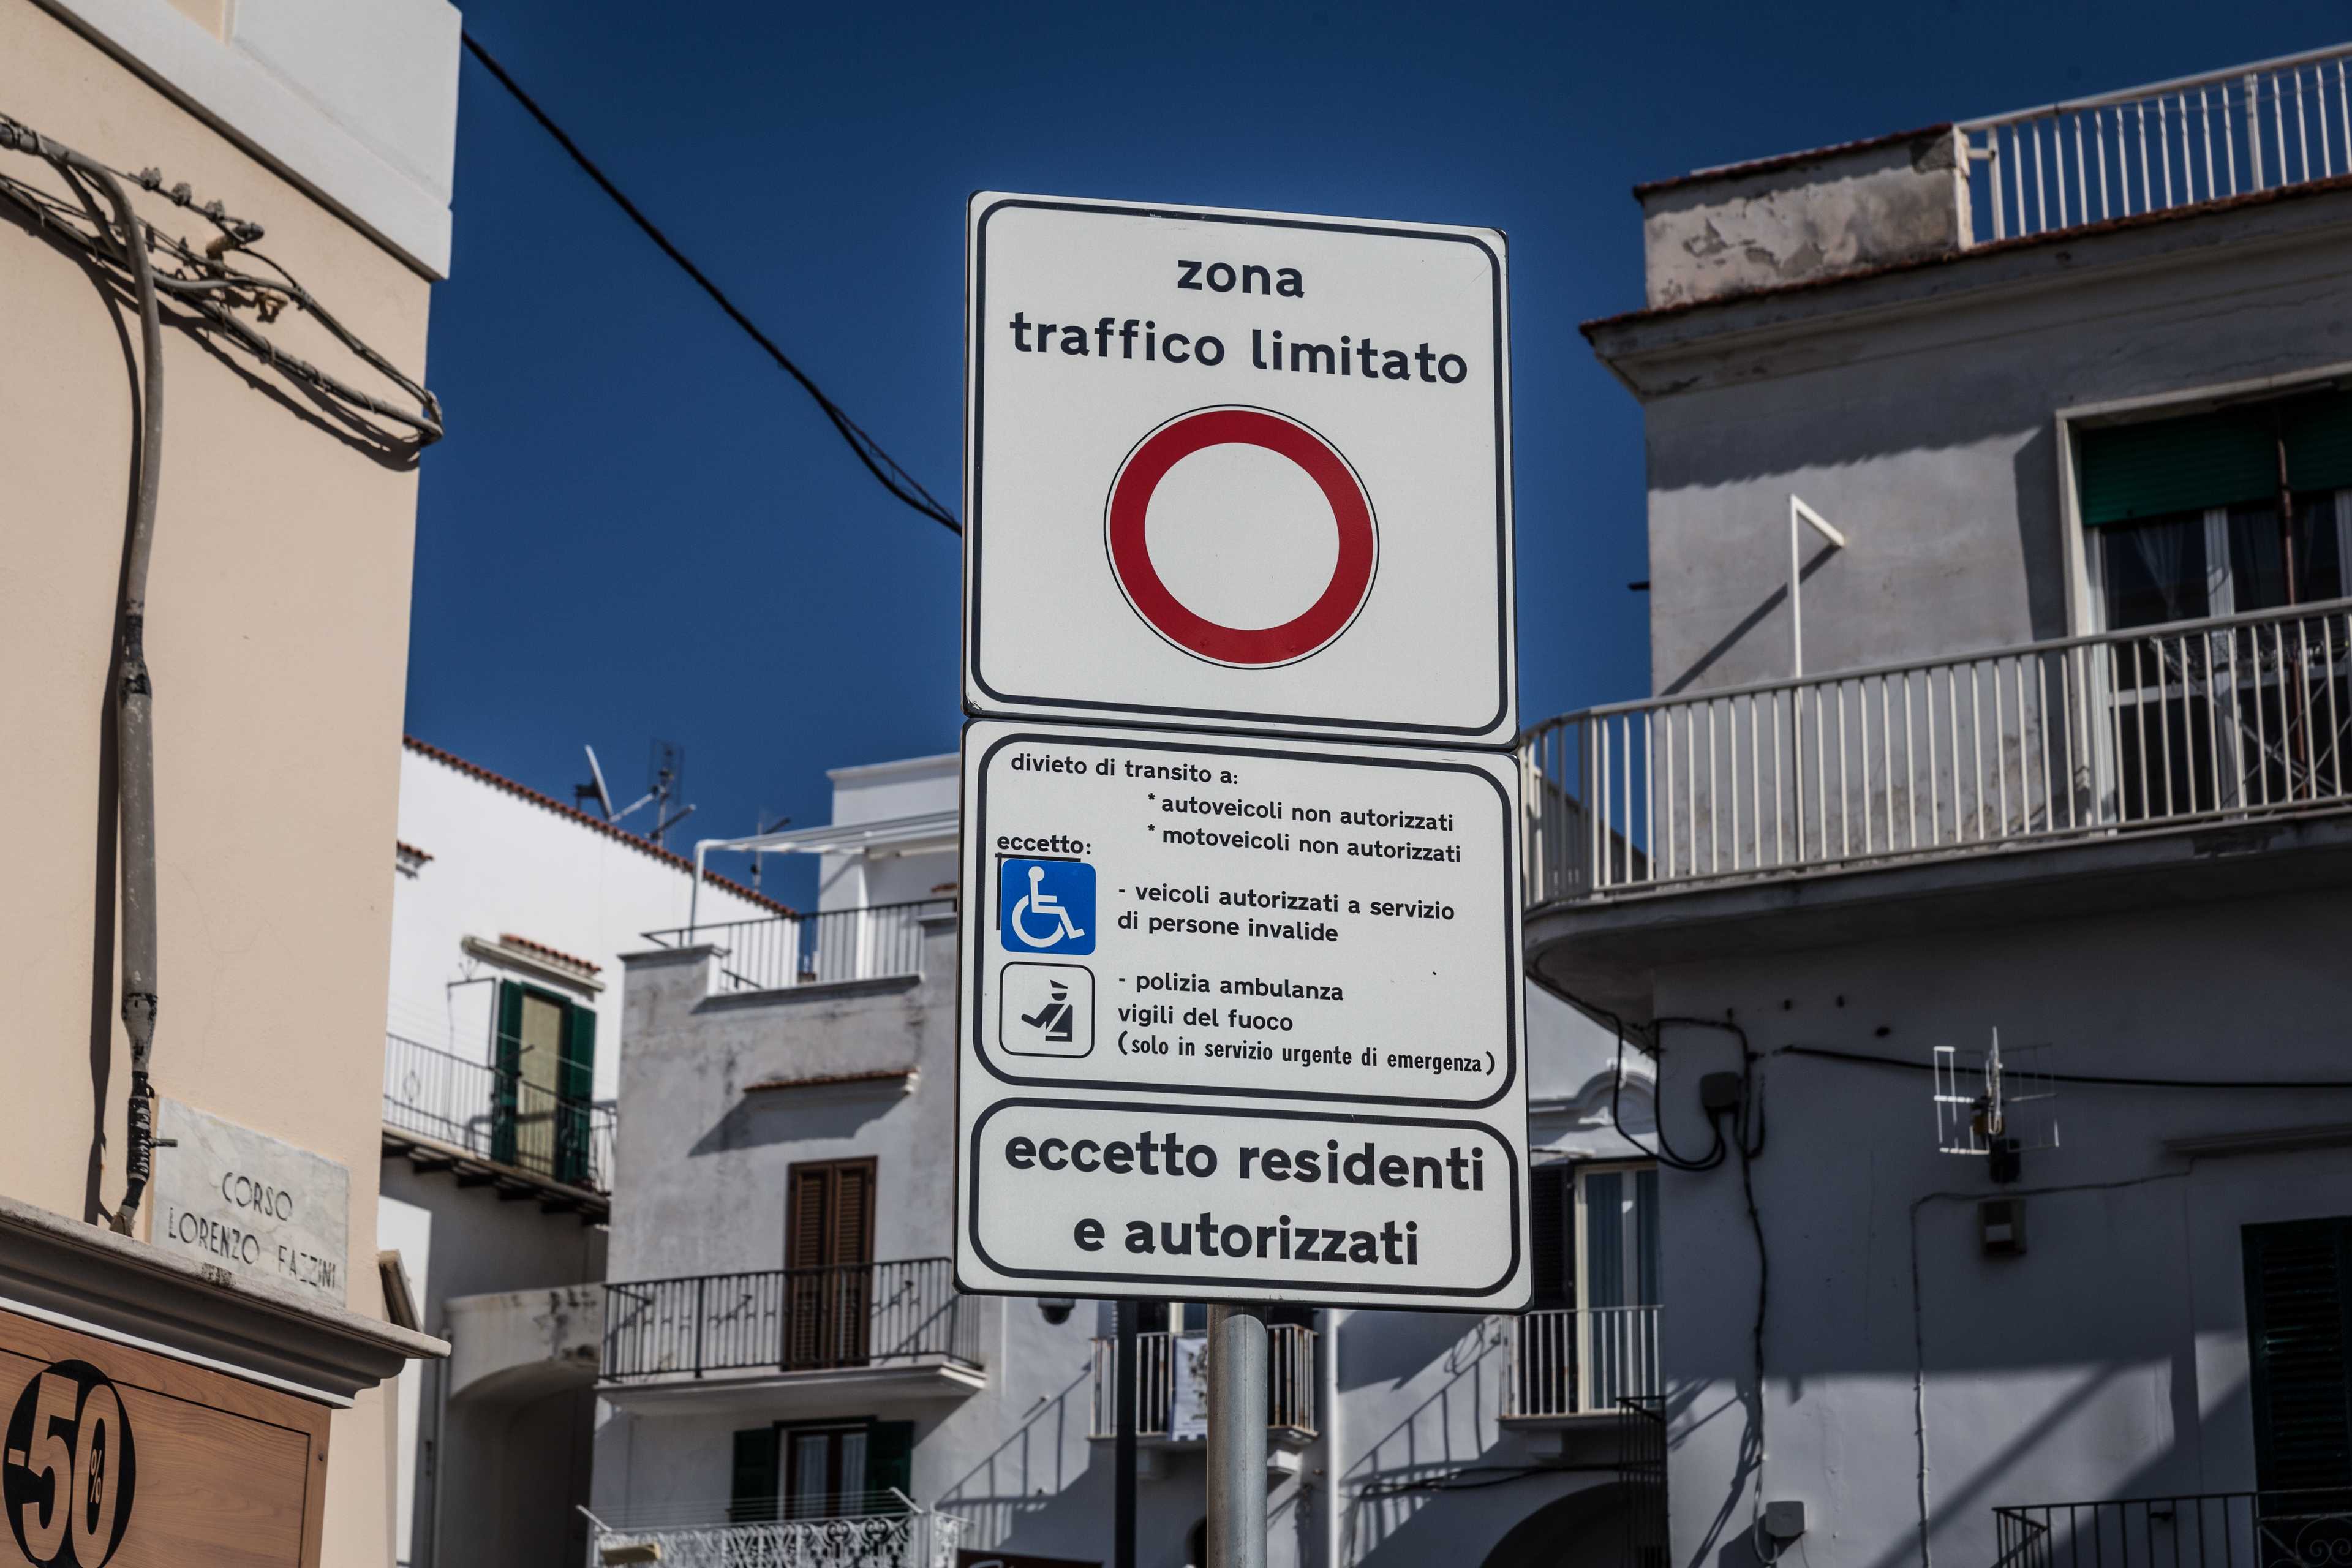 Zona Traffico Limitato road sign